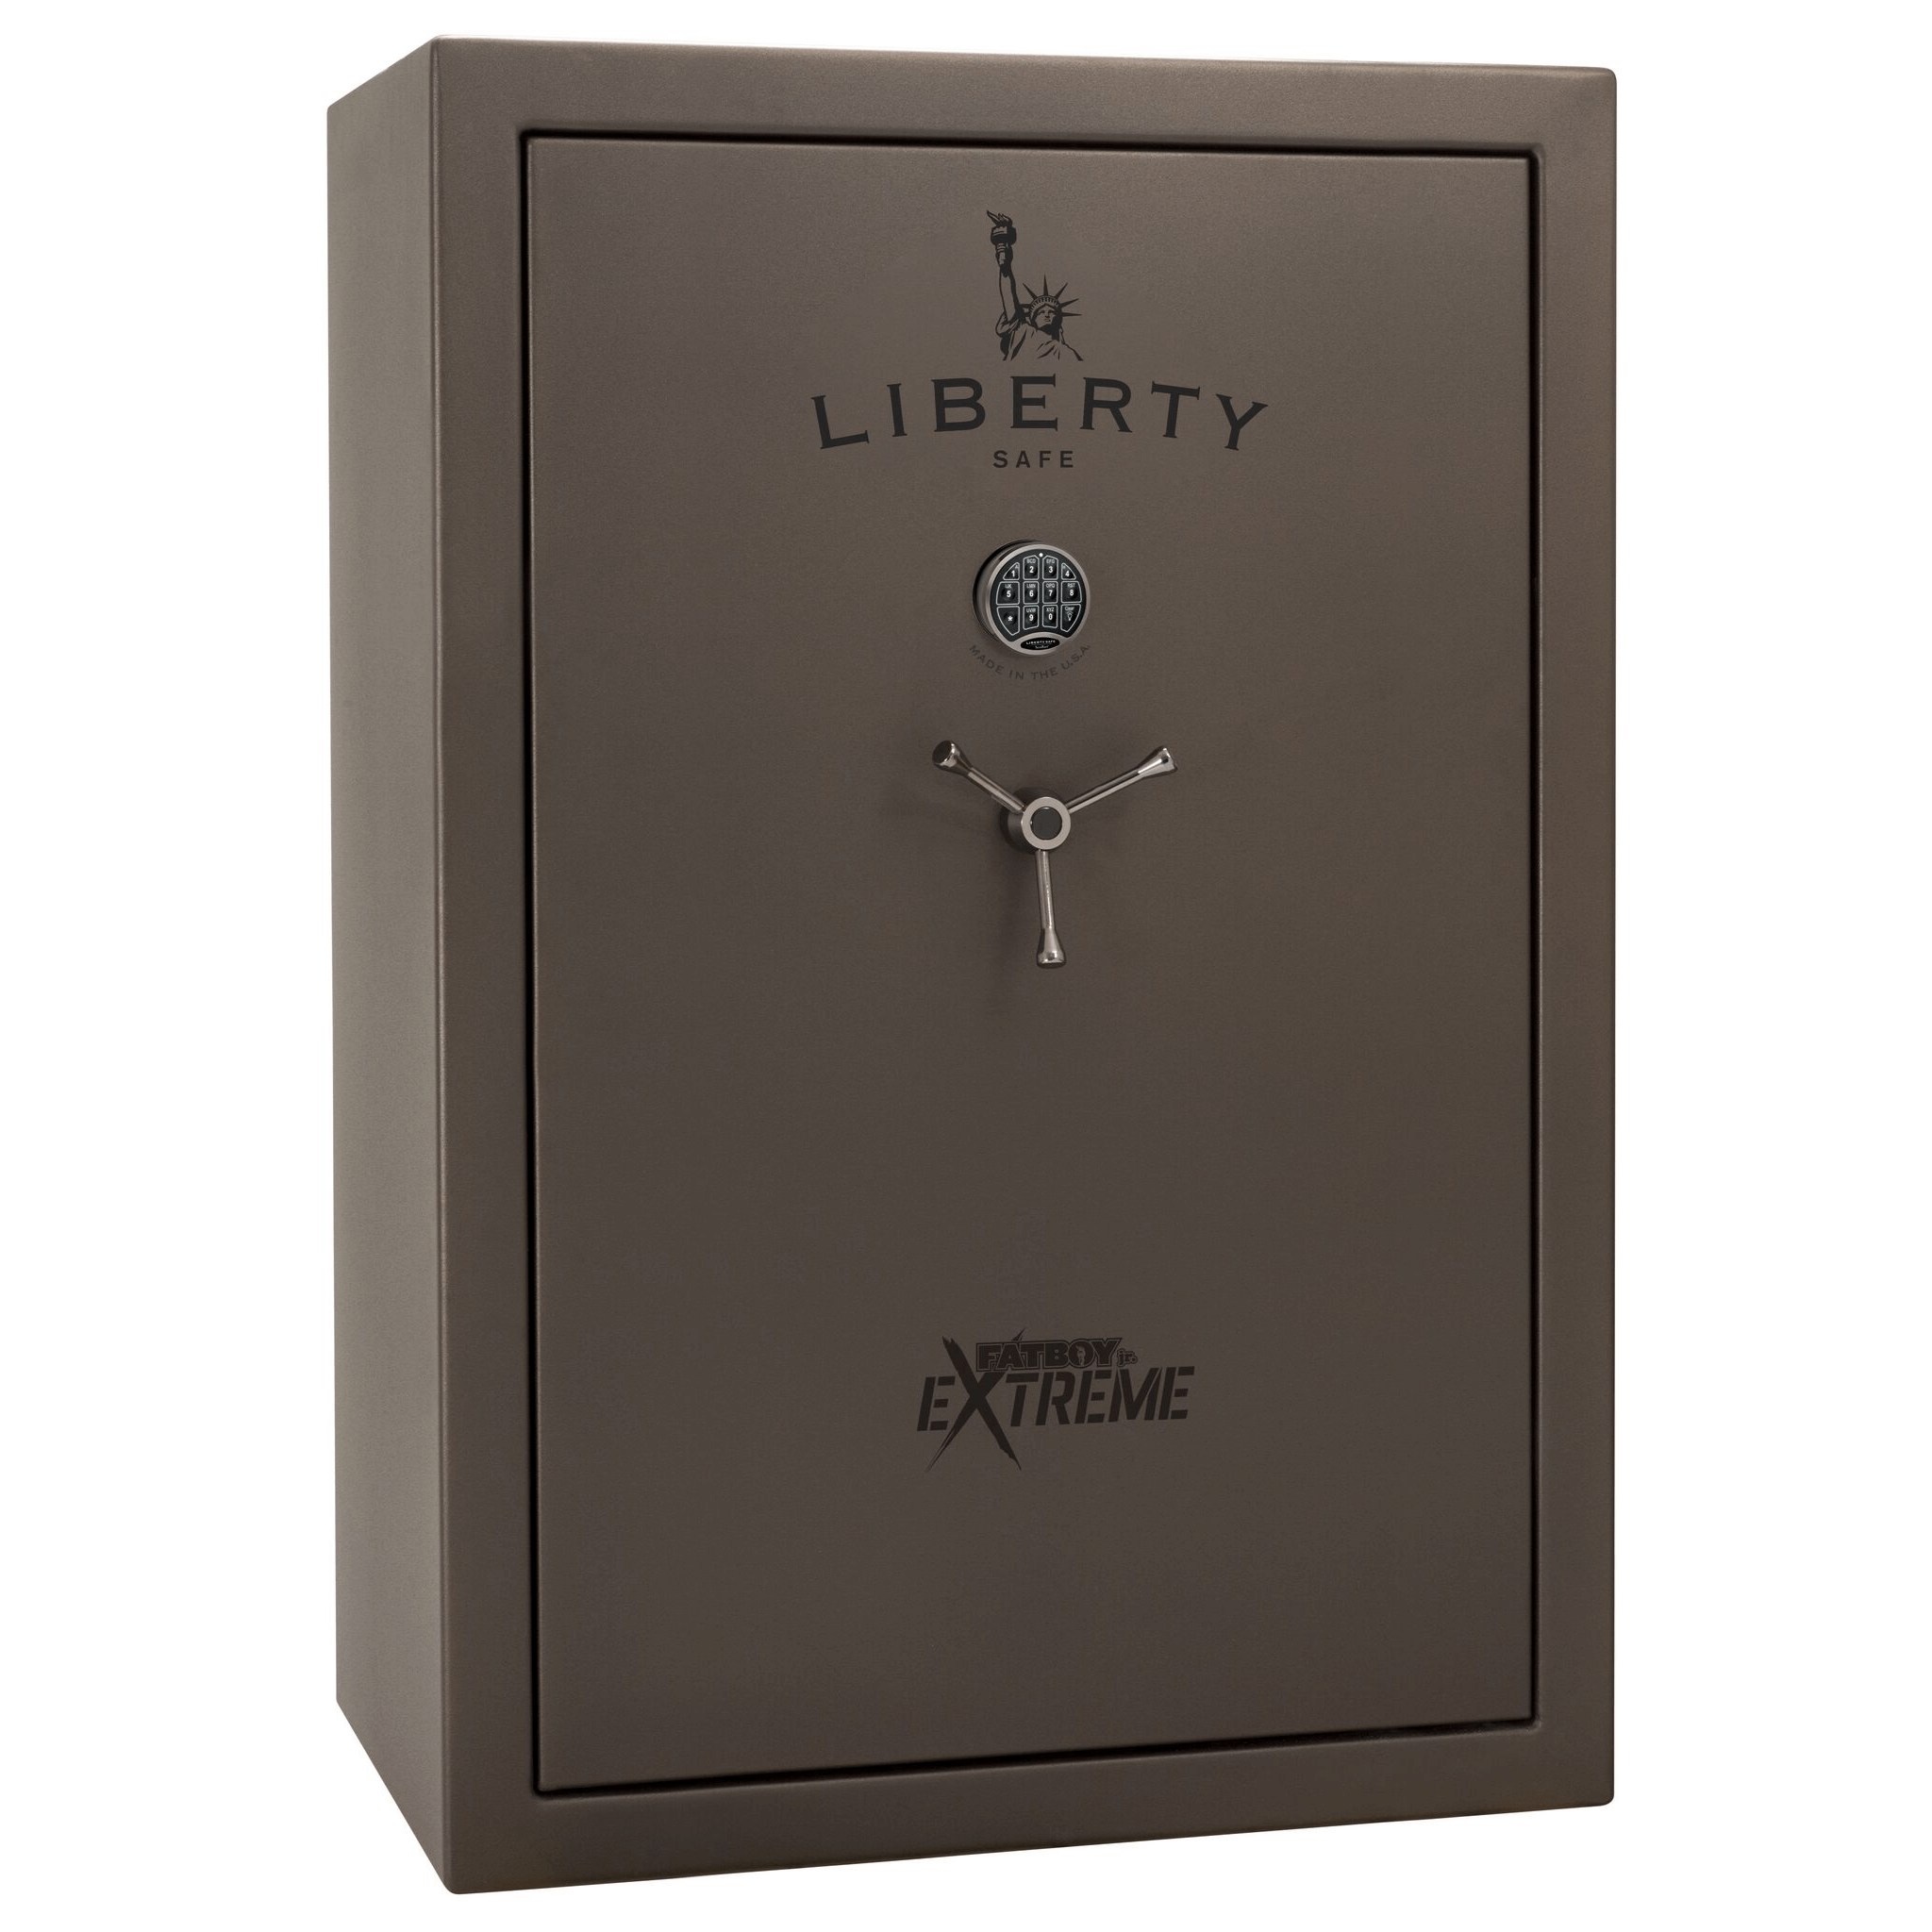 Liberty Fatboy Jr 48 Extreme Gun Safe with Electronic Lock best gun safe on a budget